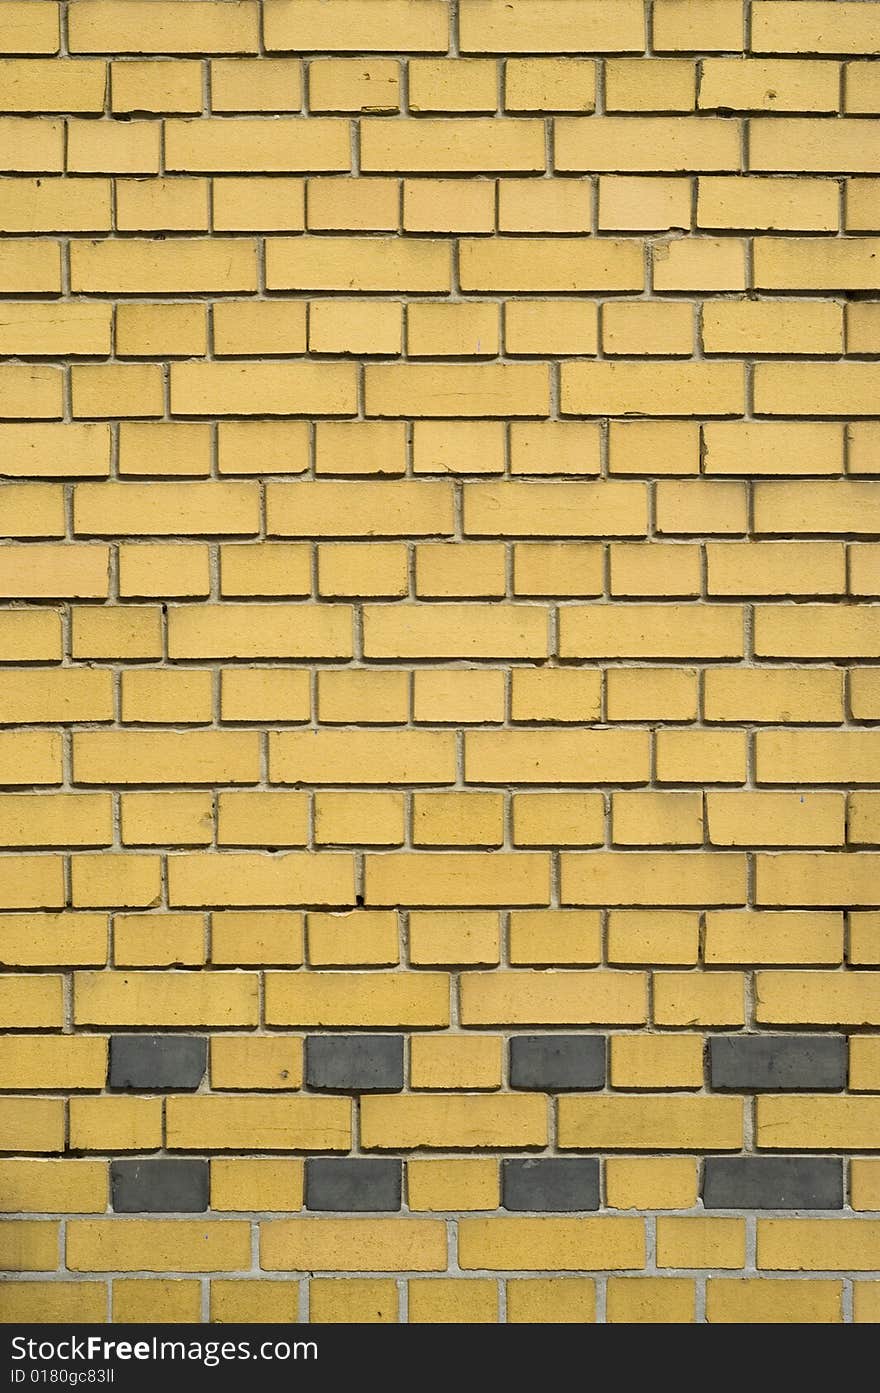 Yellow and gray brick facade, with smooth brick